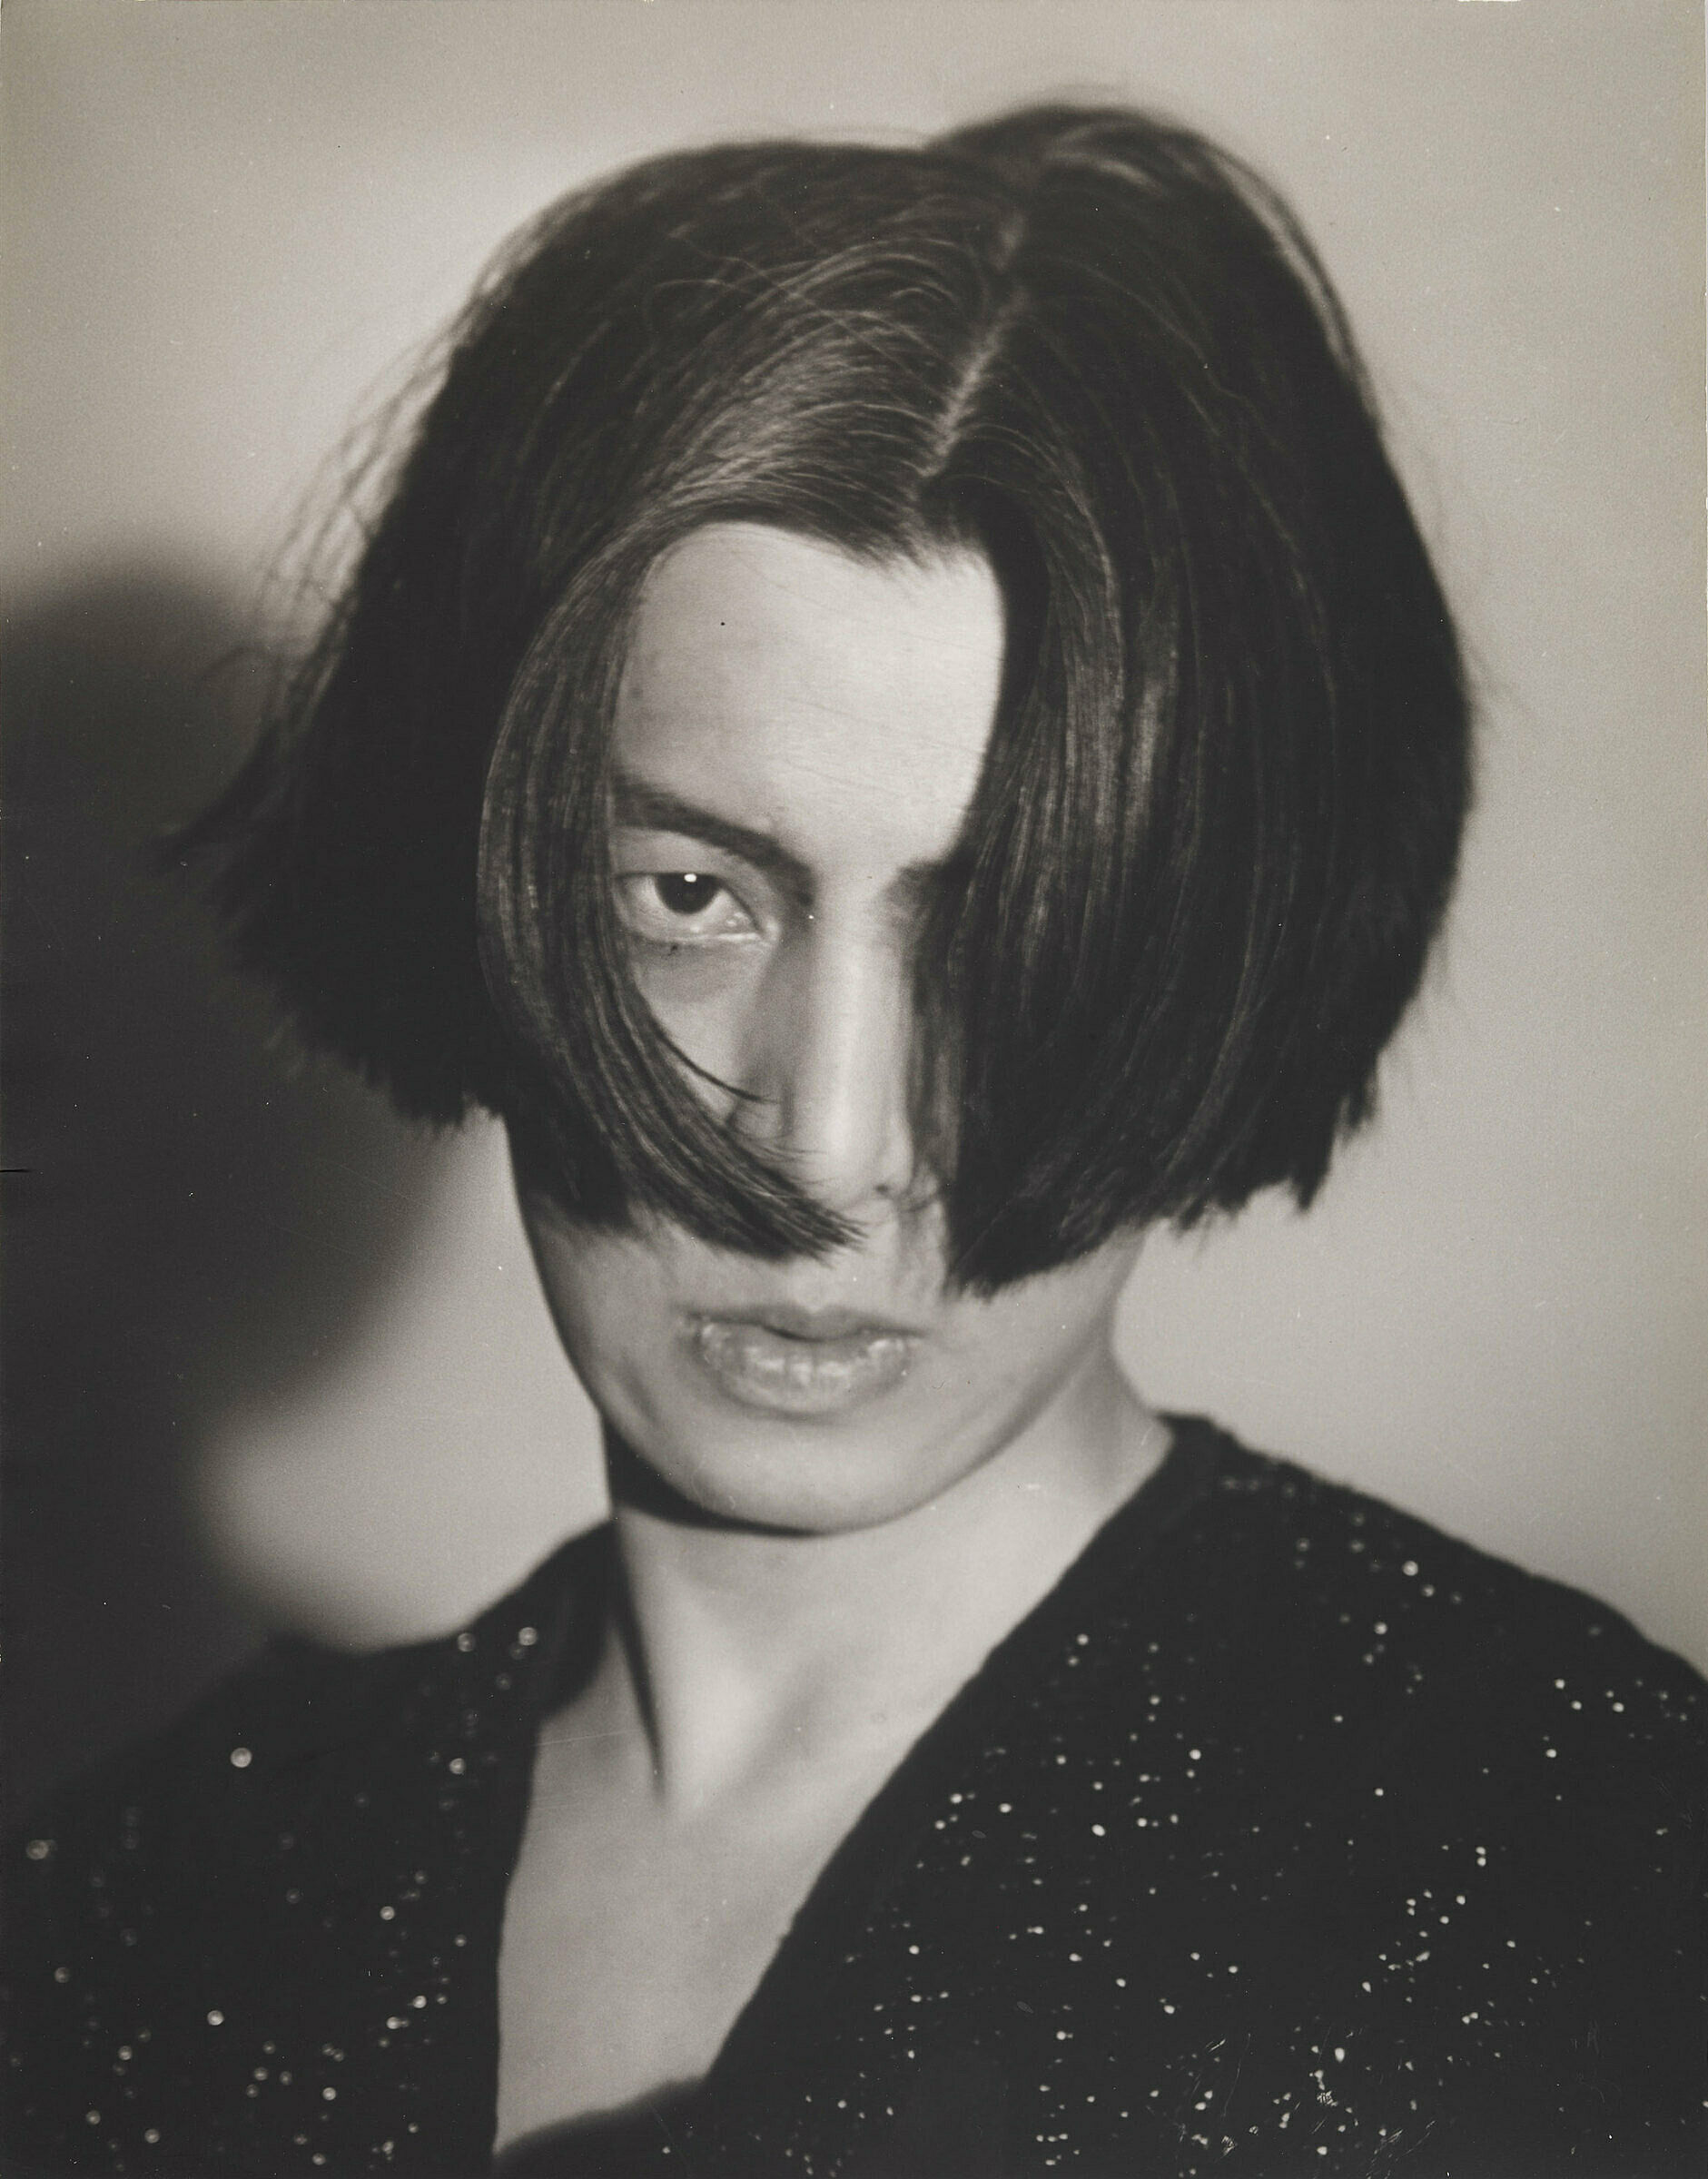 Artist Toyo Miyatake photographs his subject Michio Ito in black and white